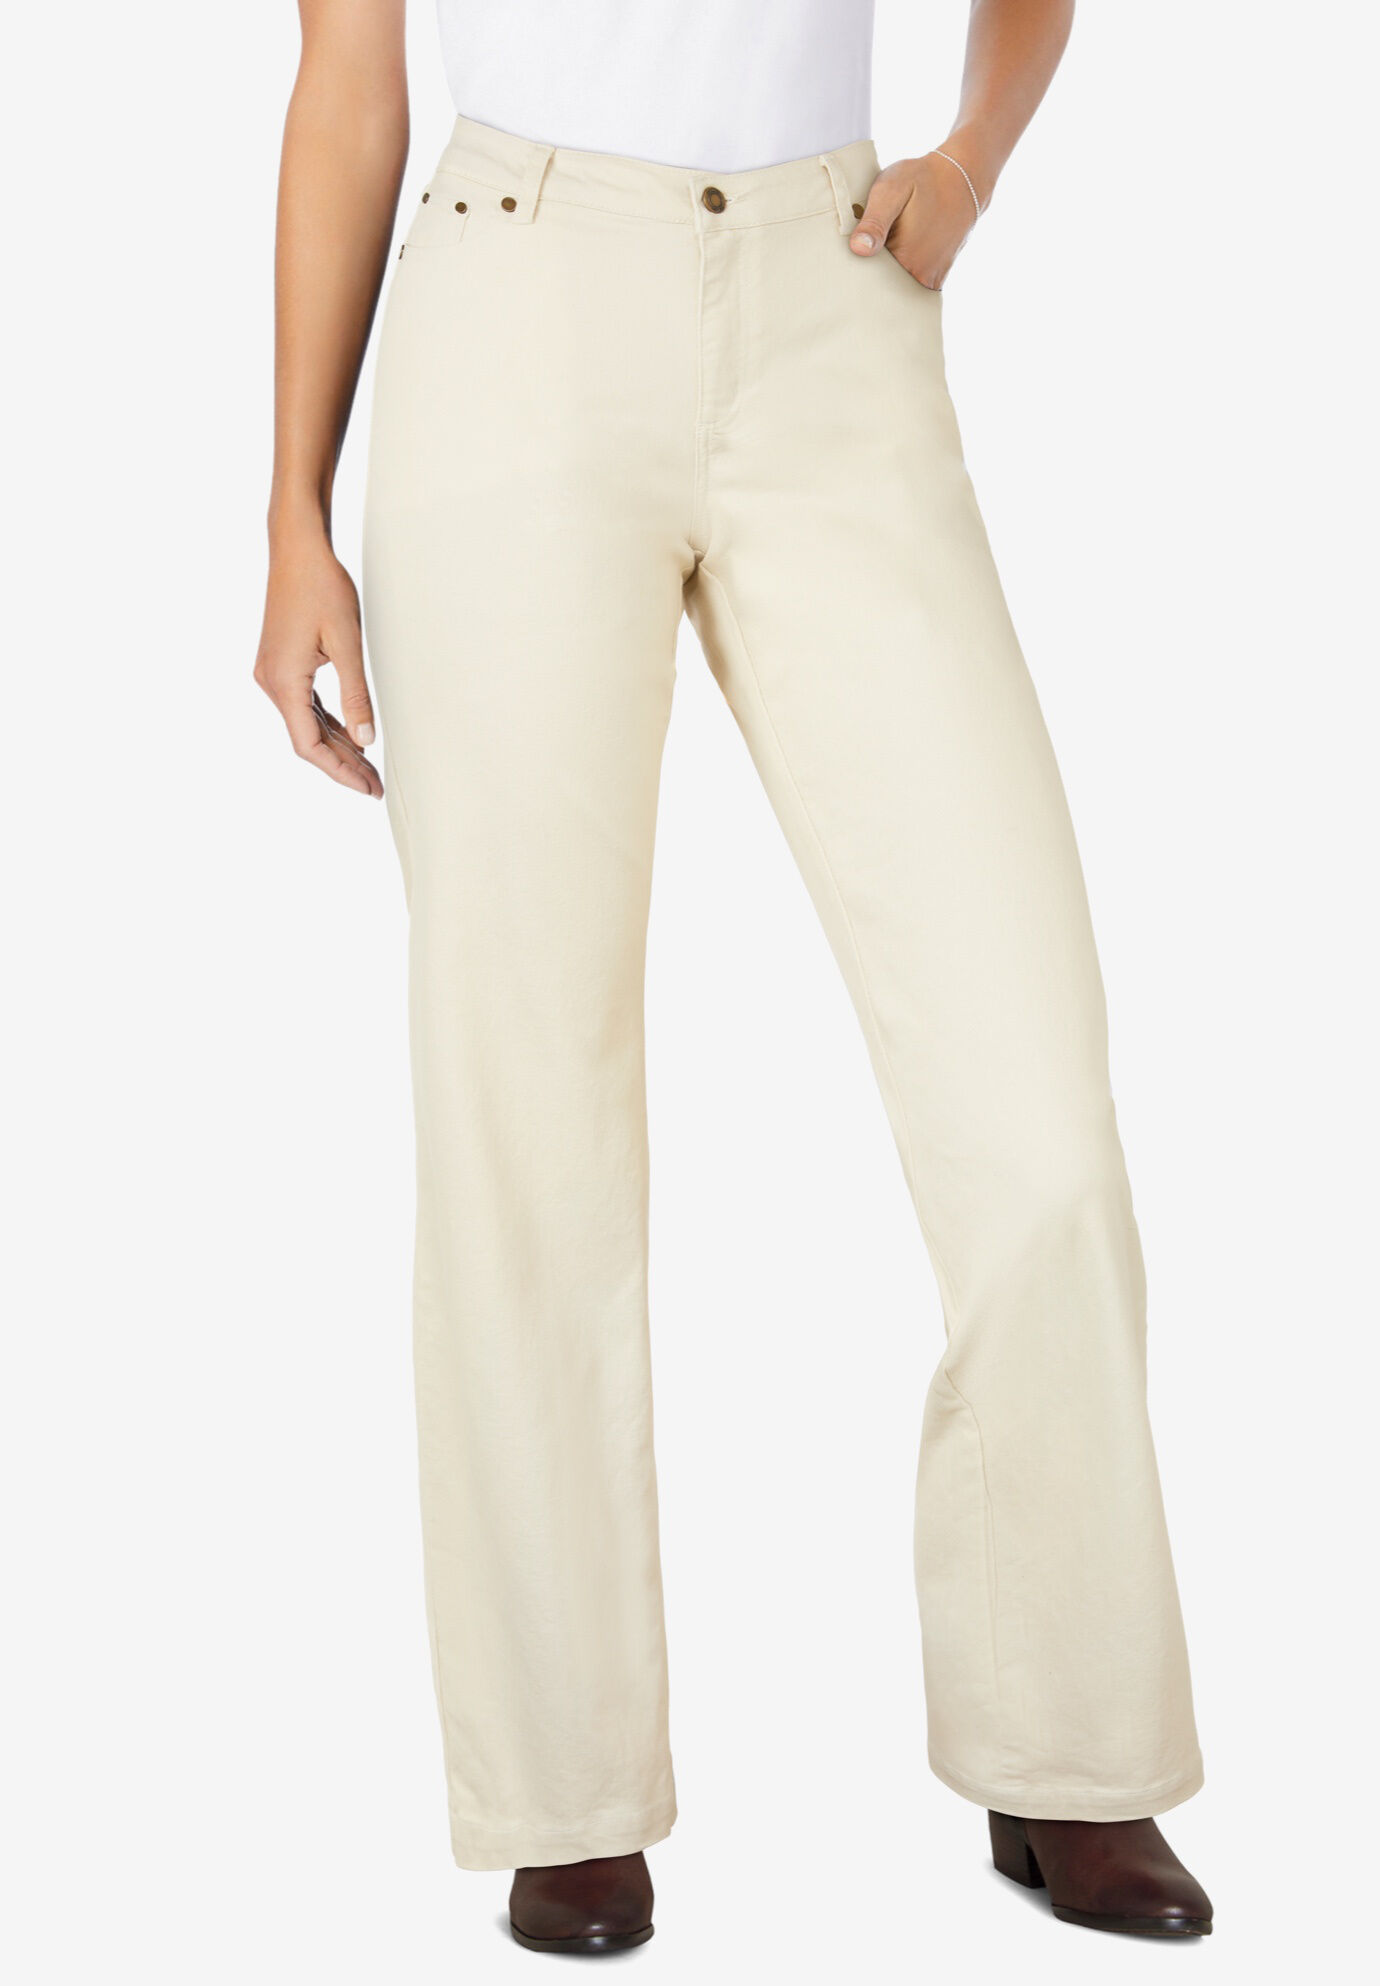 New Womens Marks & Spencer Grey Linen Trousers Size 10 Petite Leg 29 LABEL FAULT 